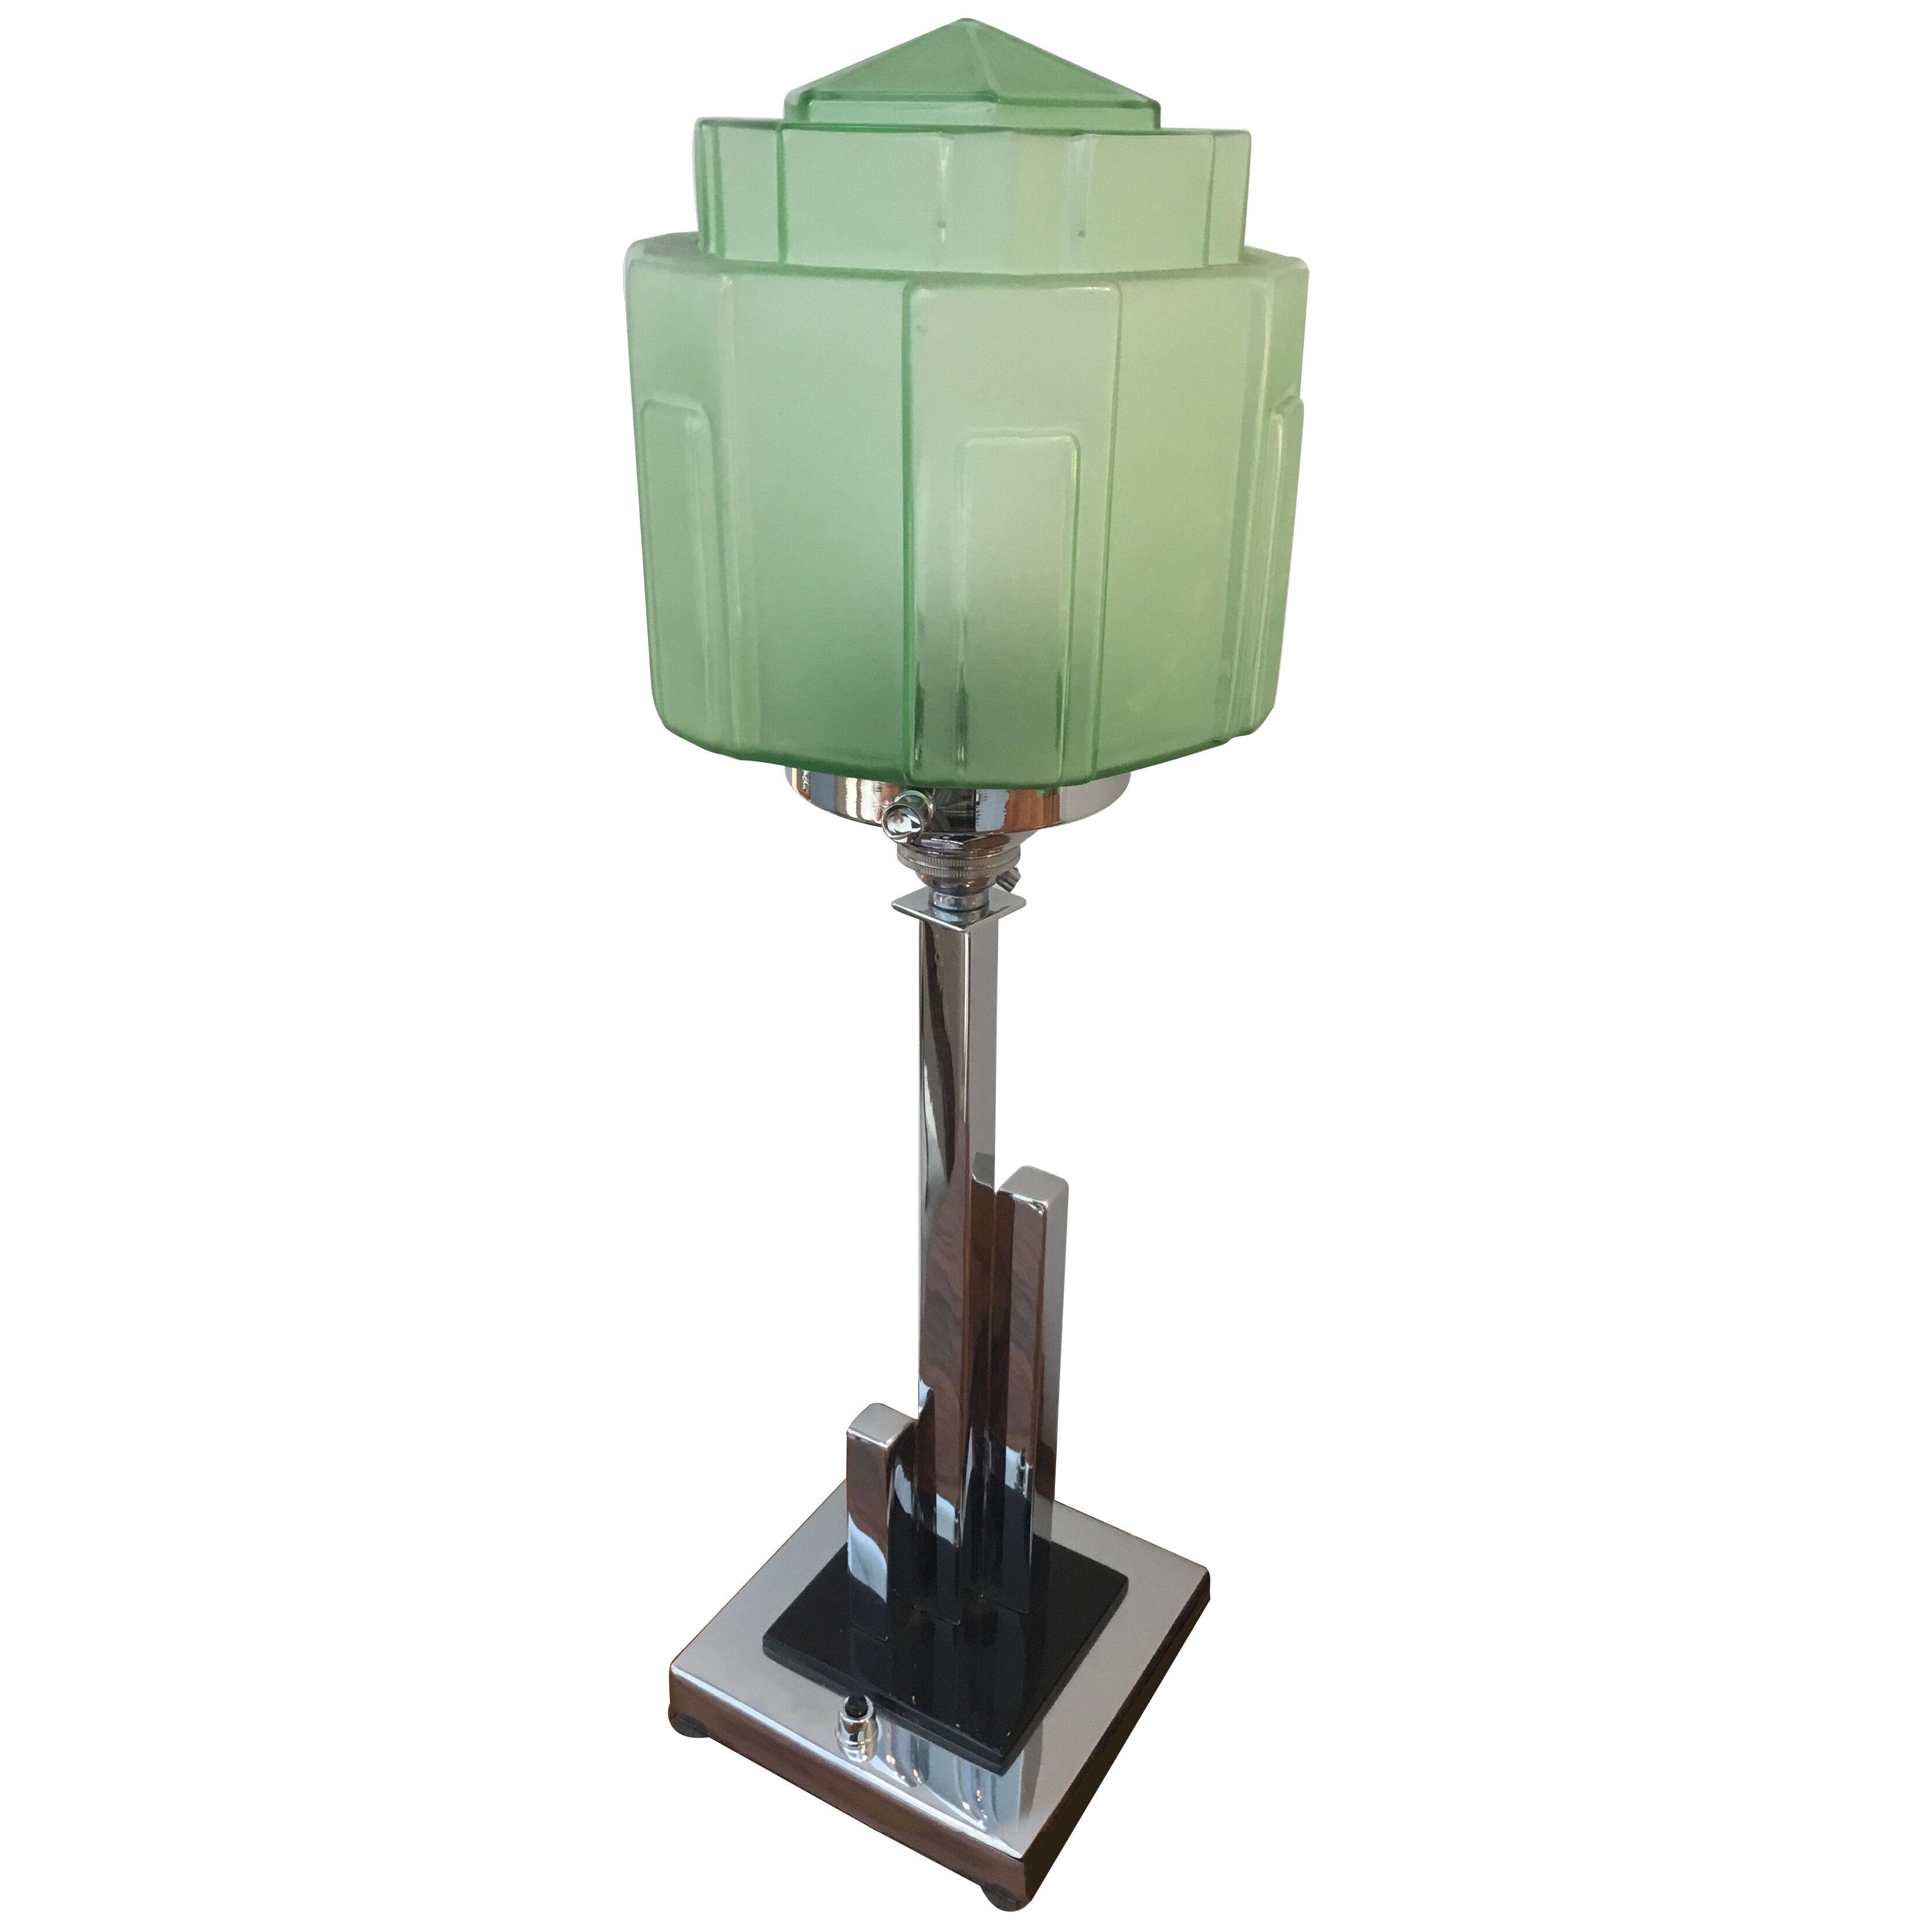 Art Deco Table Lamp green shade with triple chrome column